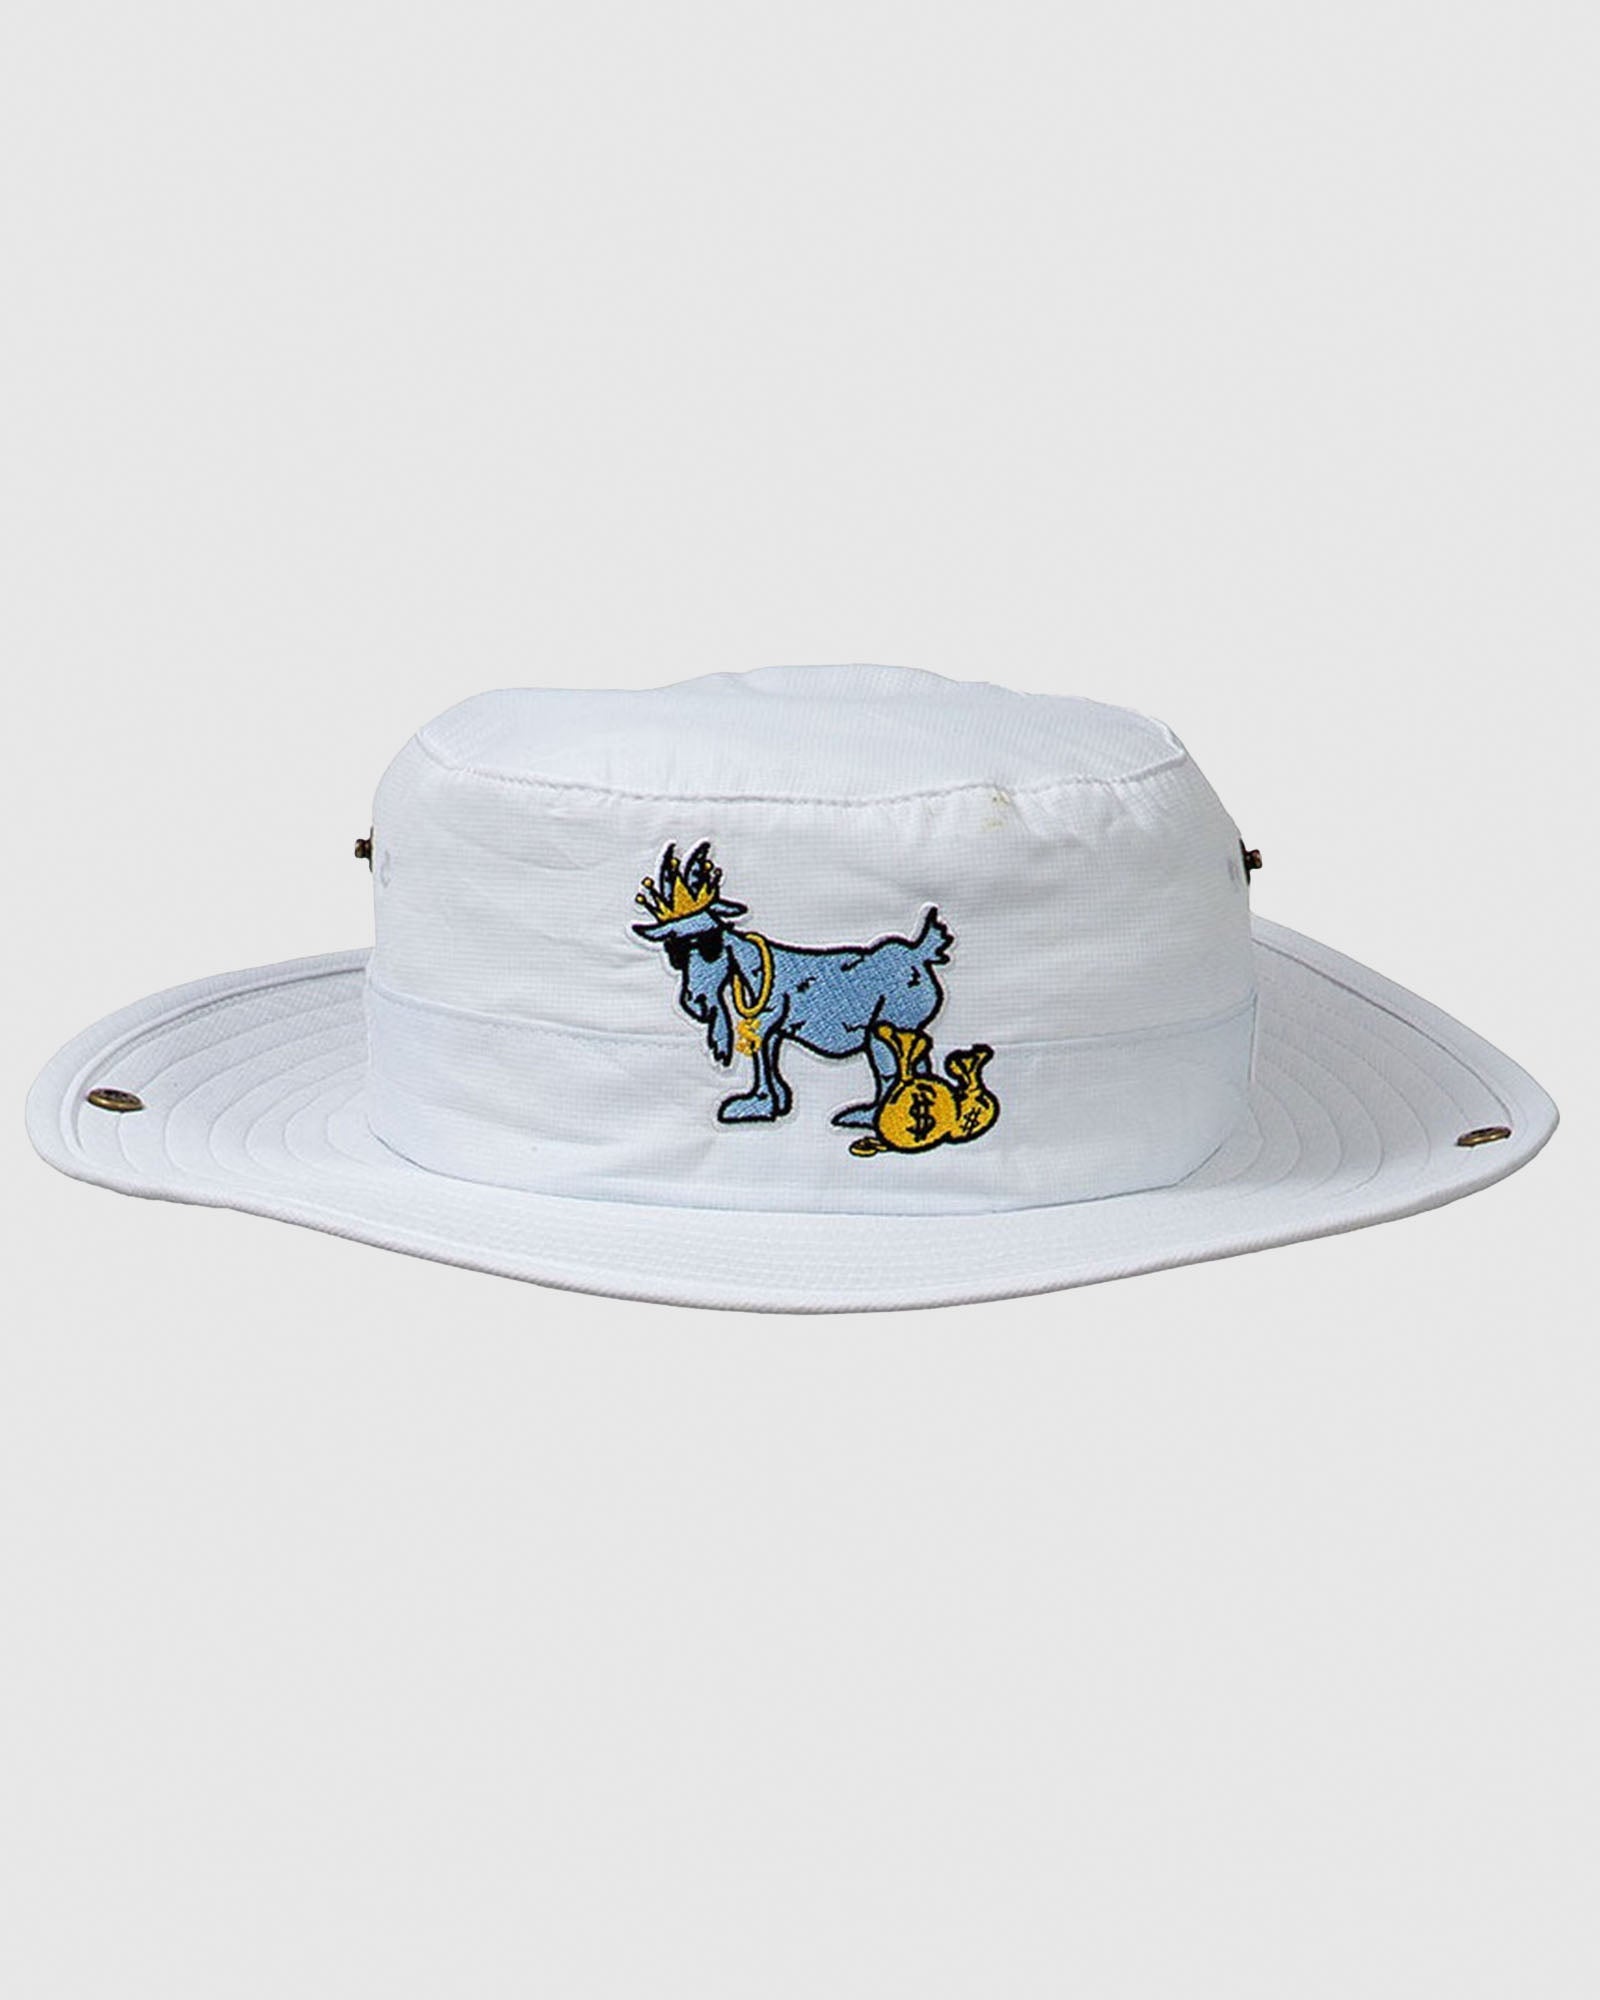 Goat USA OG Bucket Hat Accessories Goat USA White Cash Money  